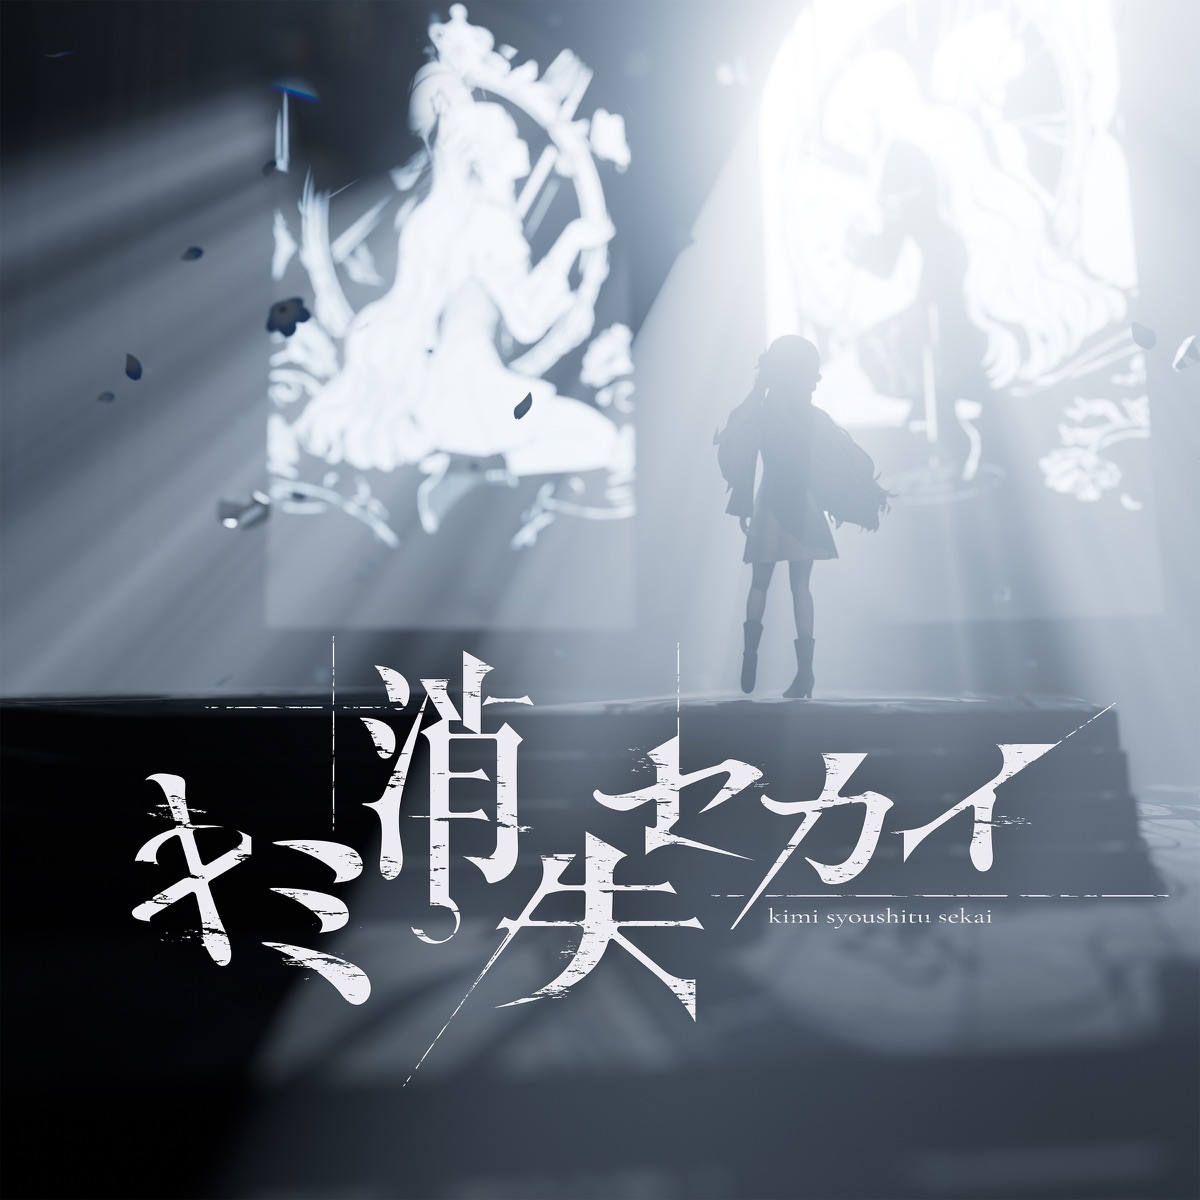 Cover art for『Isekaijoucho - キミ消失セカイ』from the release『Kimi Shoushitsu Sekai